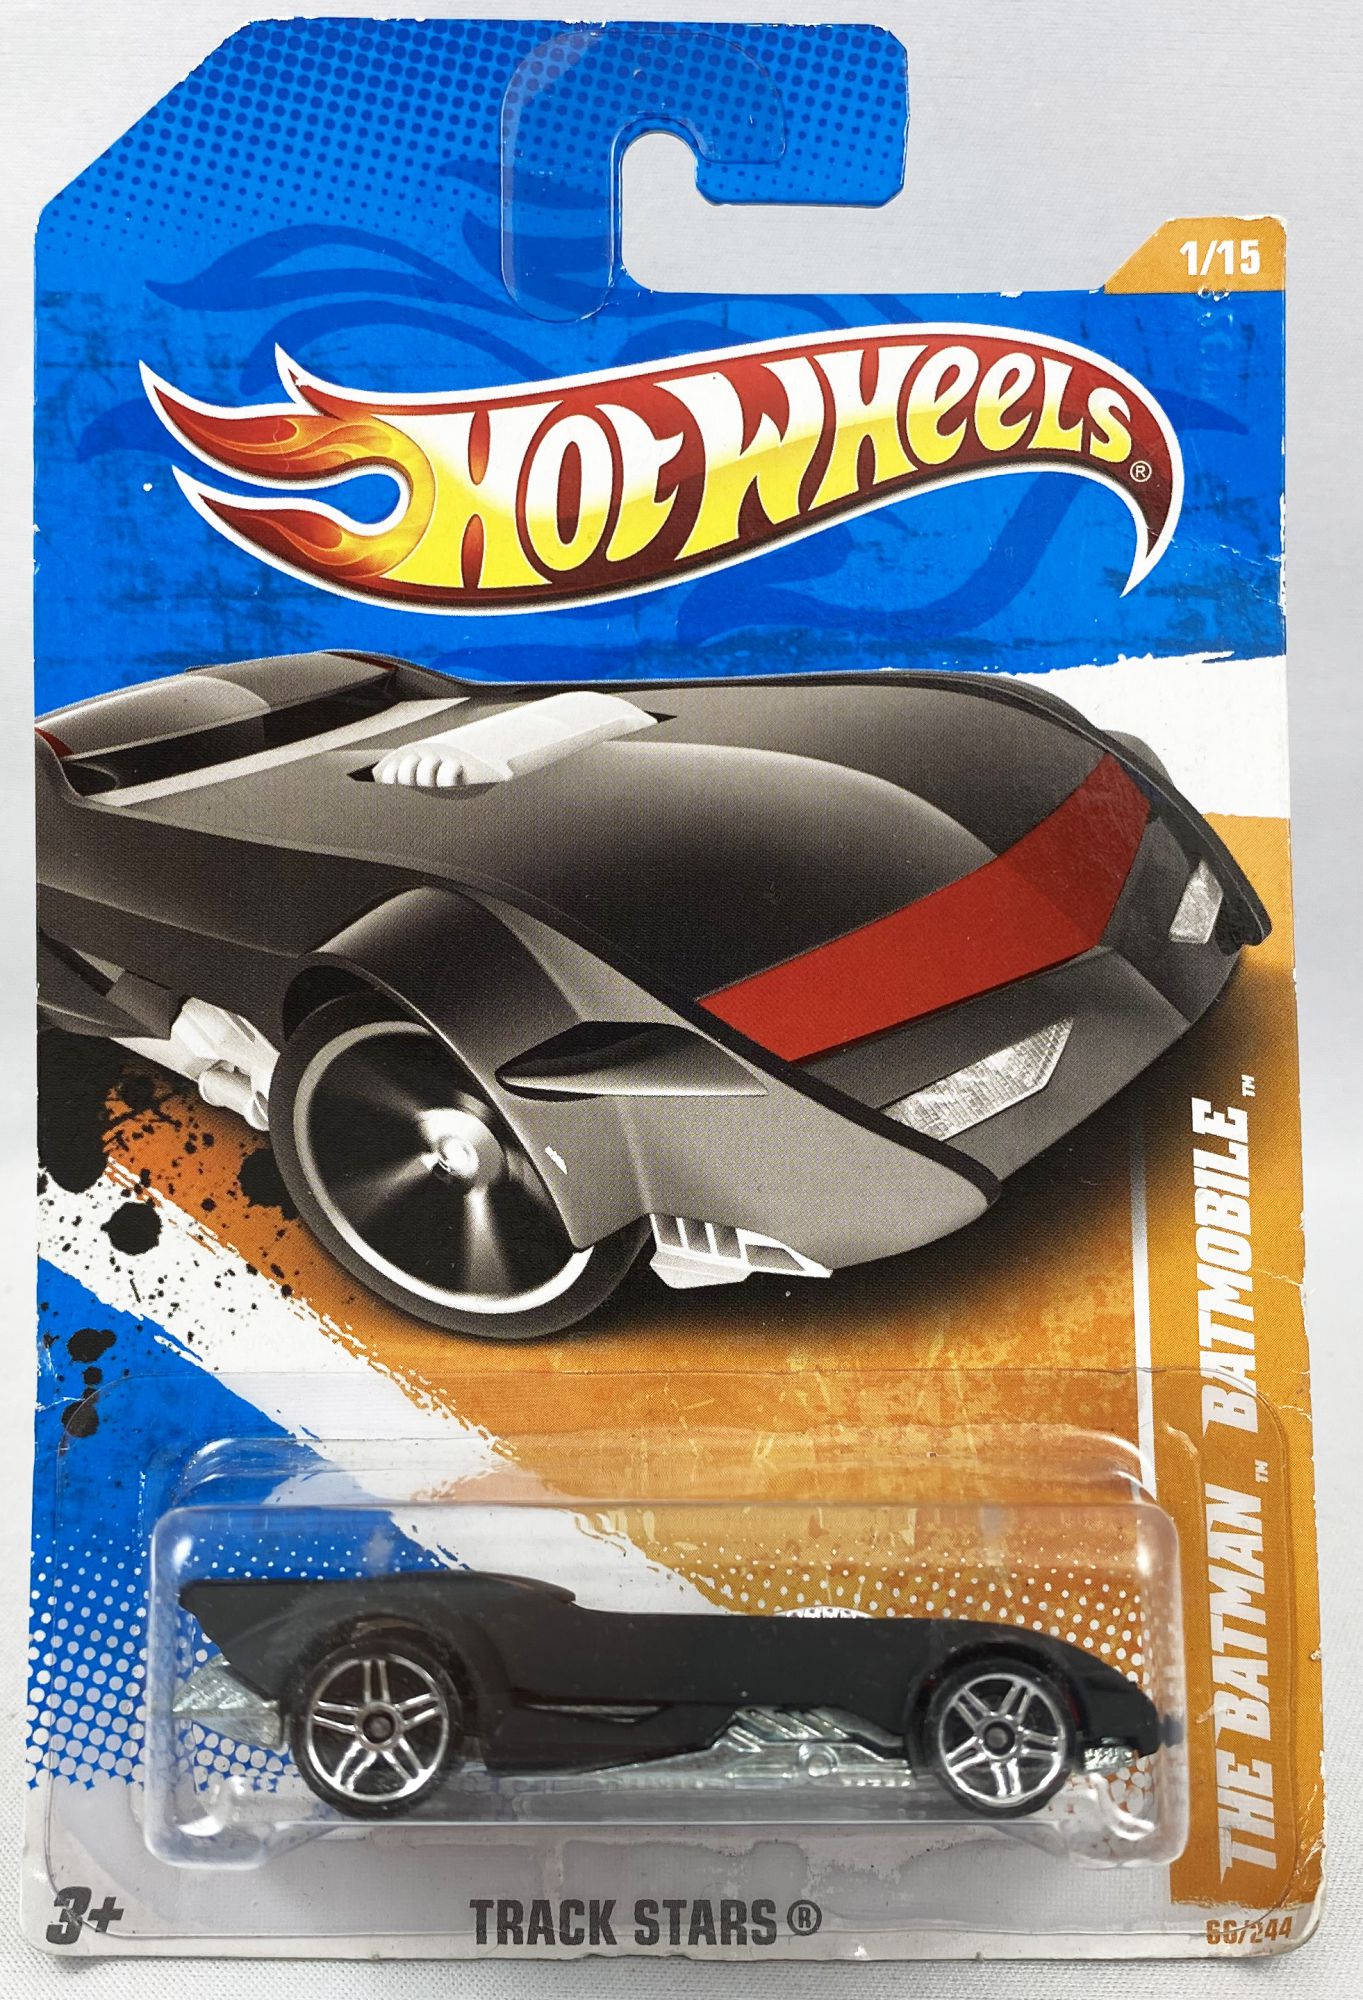 Hot Wheels – Track Stars – The batman Batmobile col. 1/15